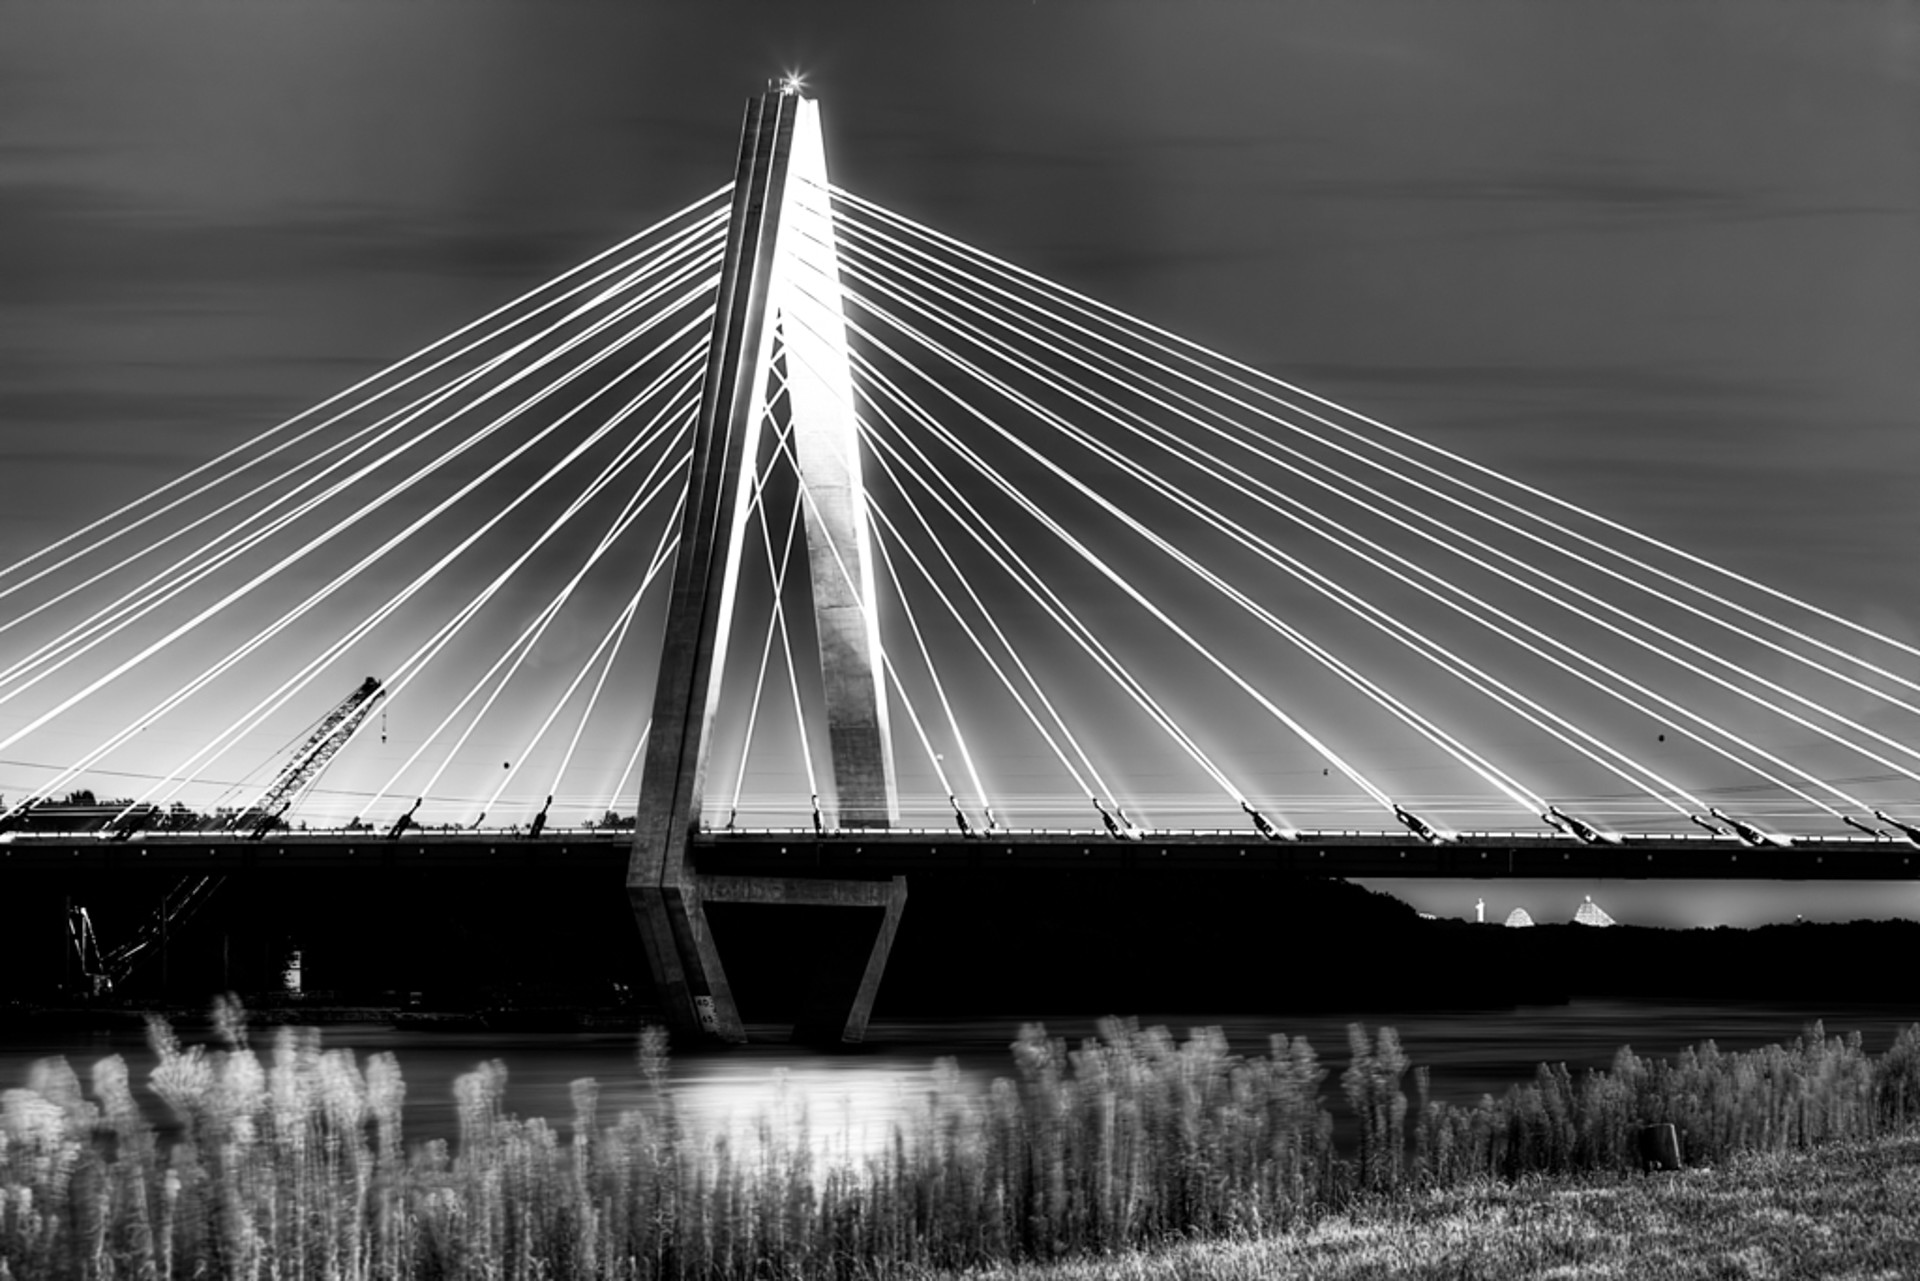 Night Bridge by Eric Bowers